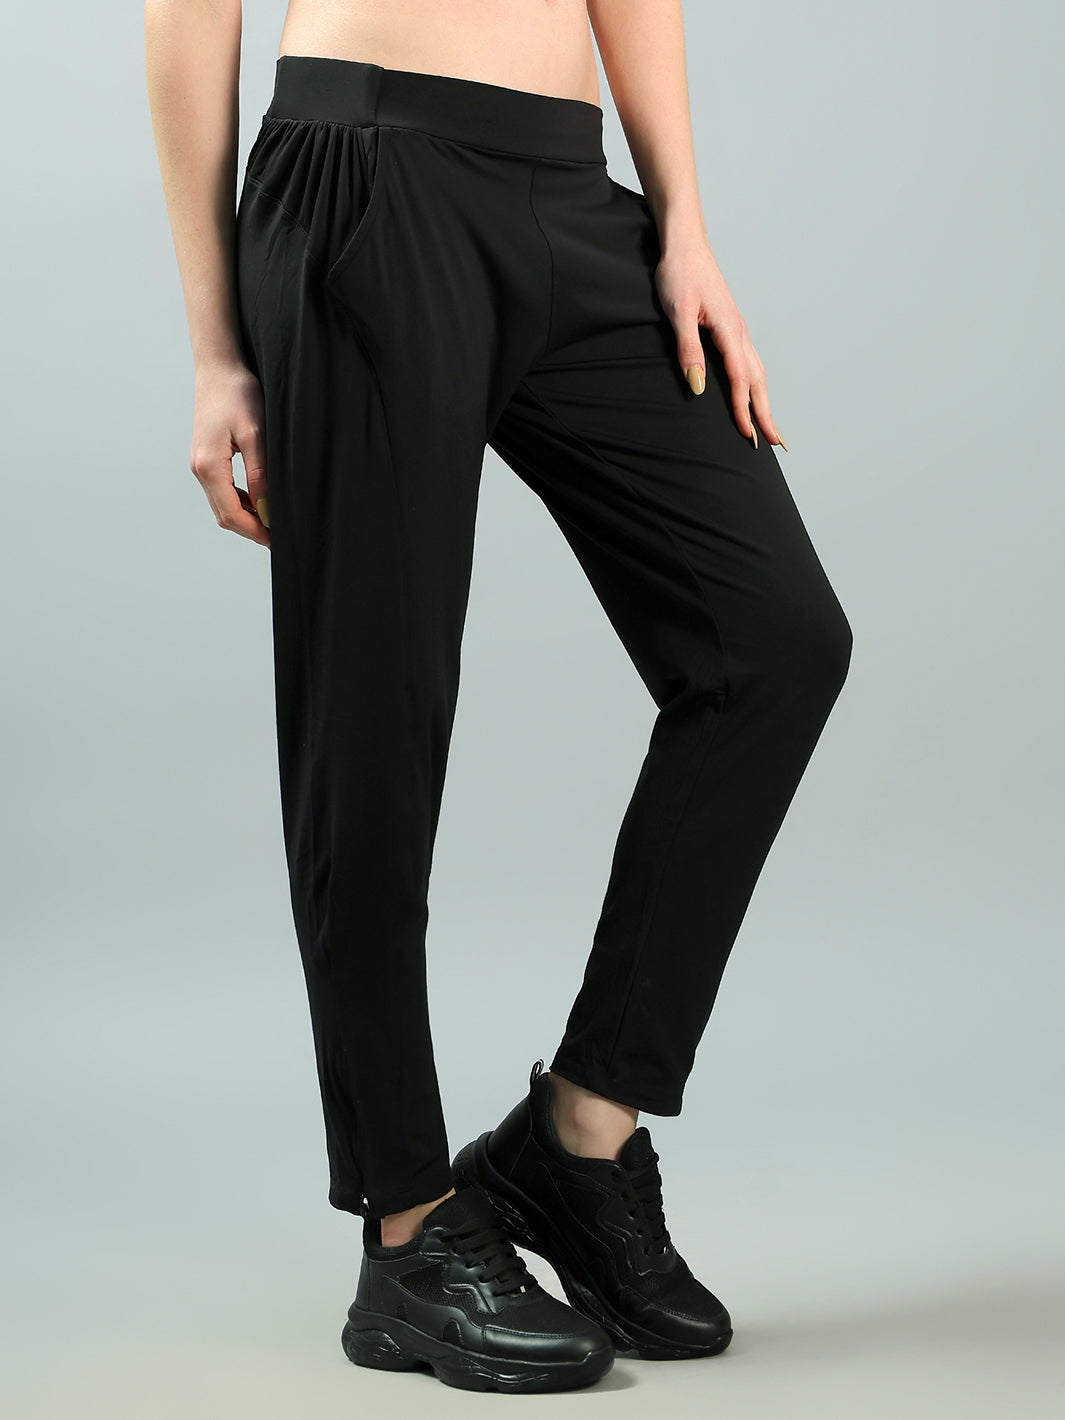 Buy ELVORA Women Smart Slim Fit Peg Trousers (28, Black) at Amazon.in